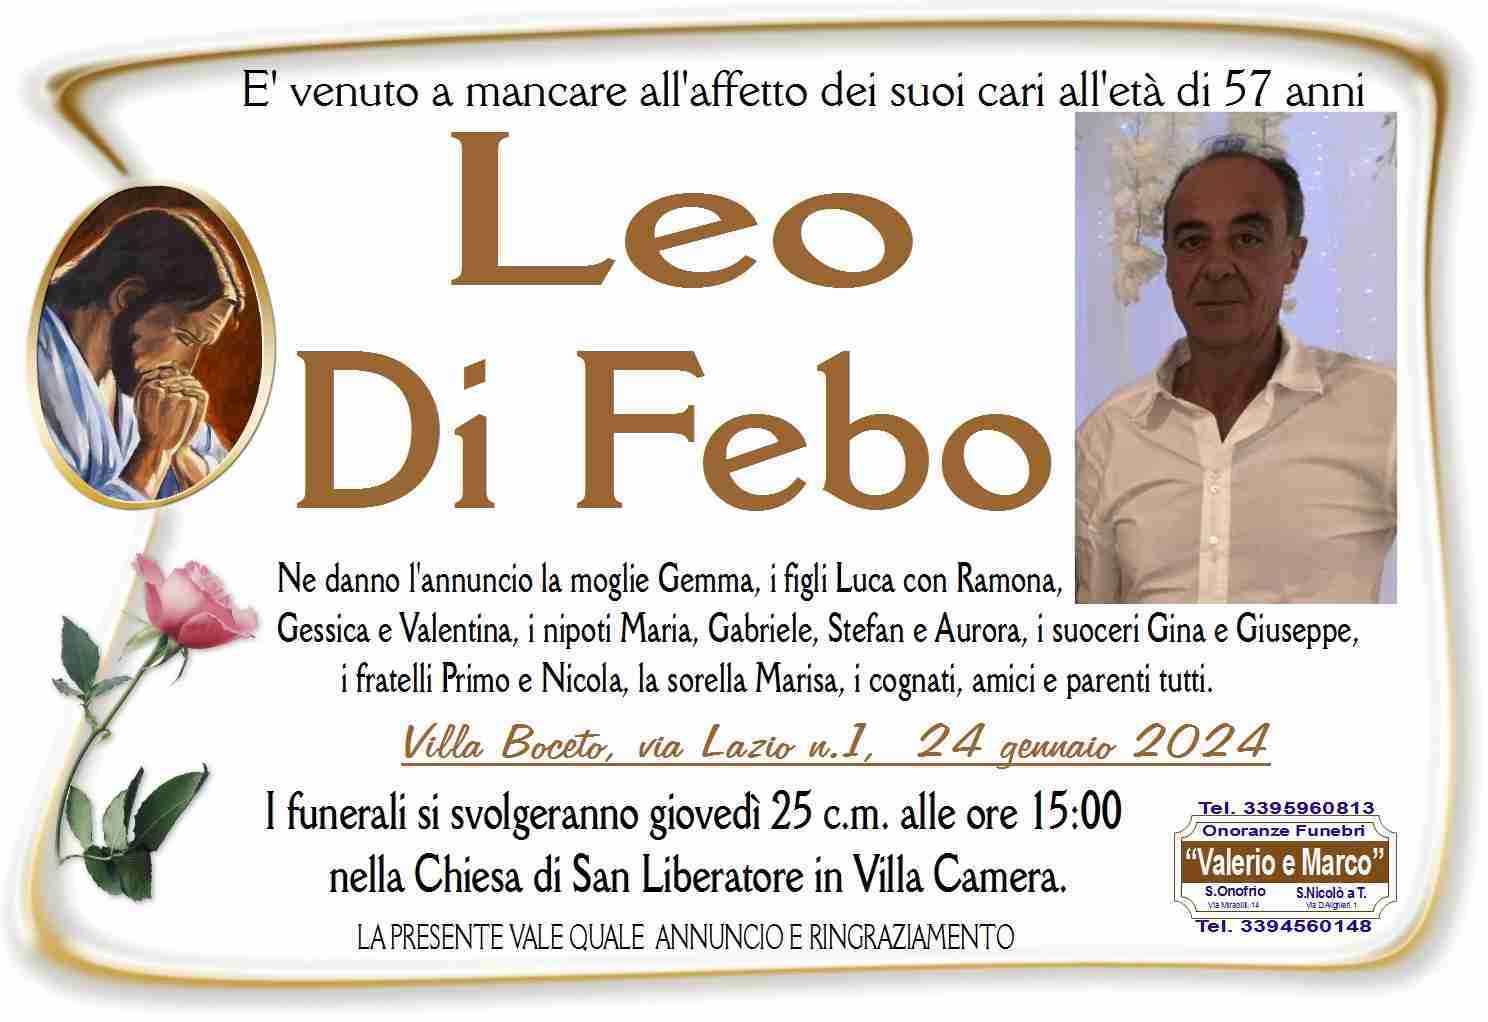 Leo Di Febo